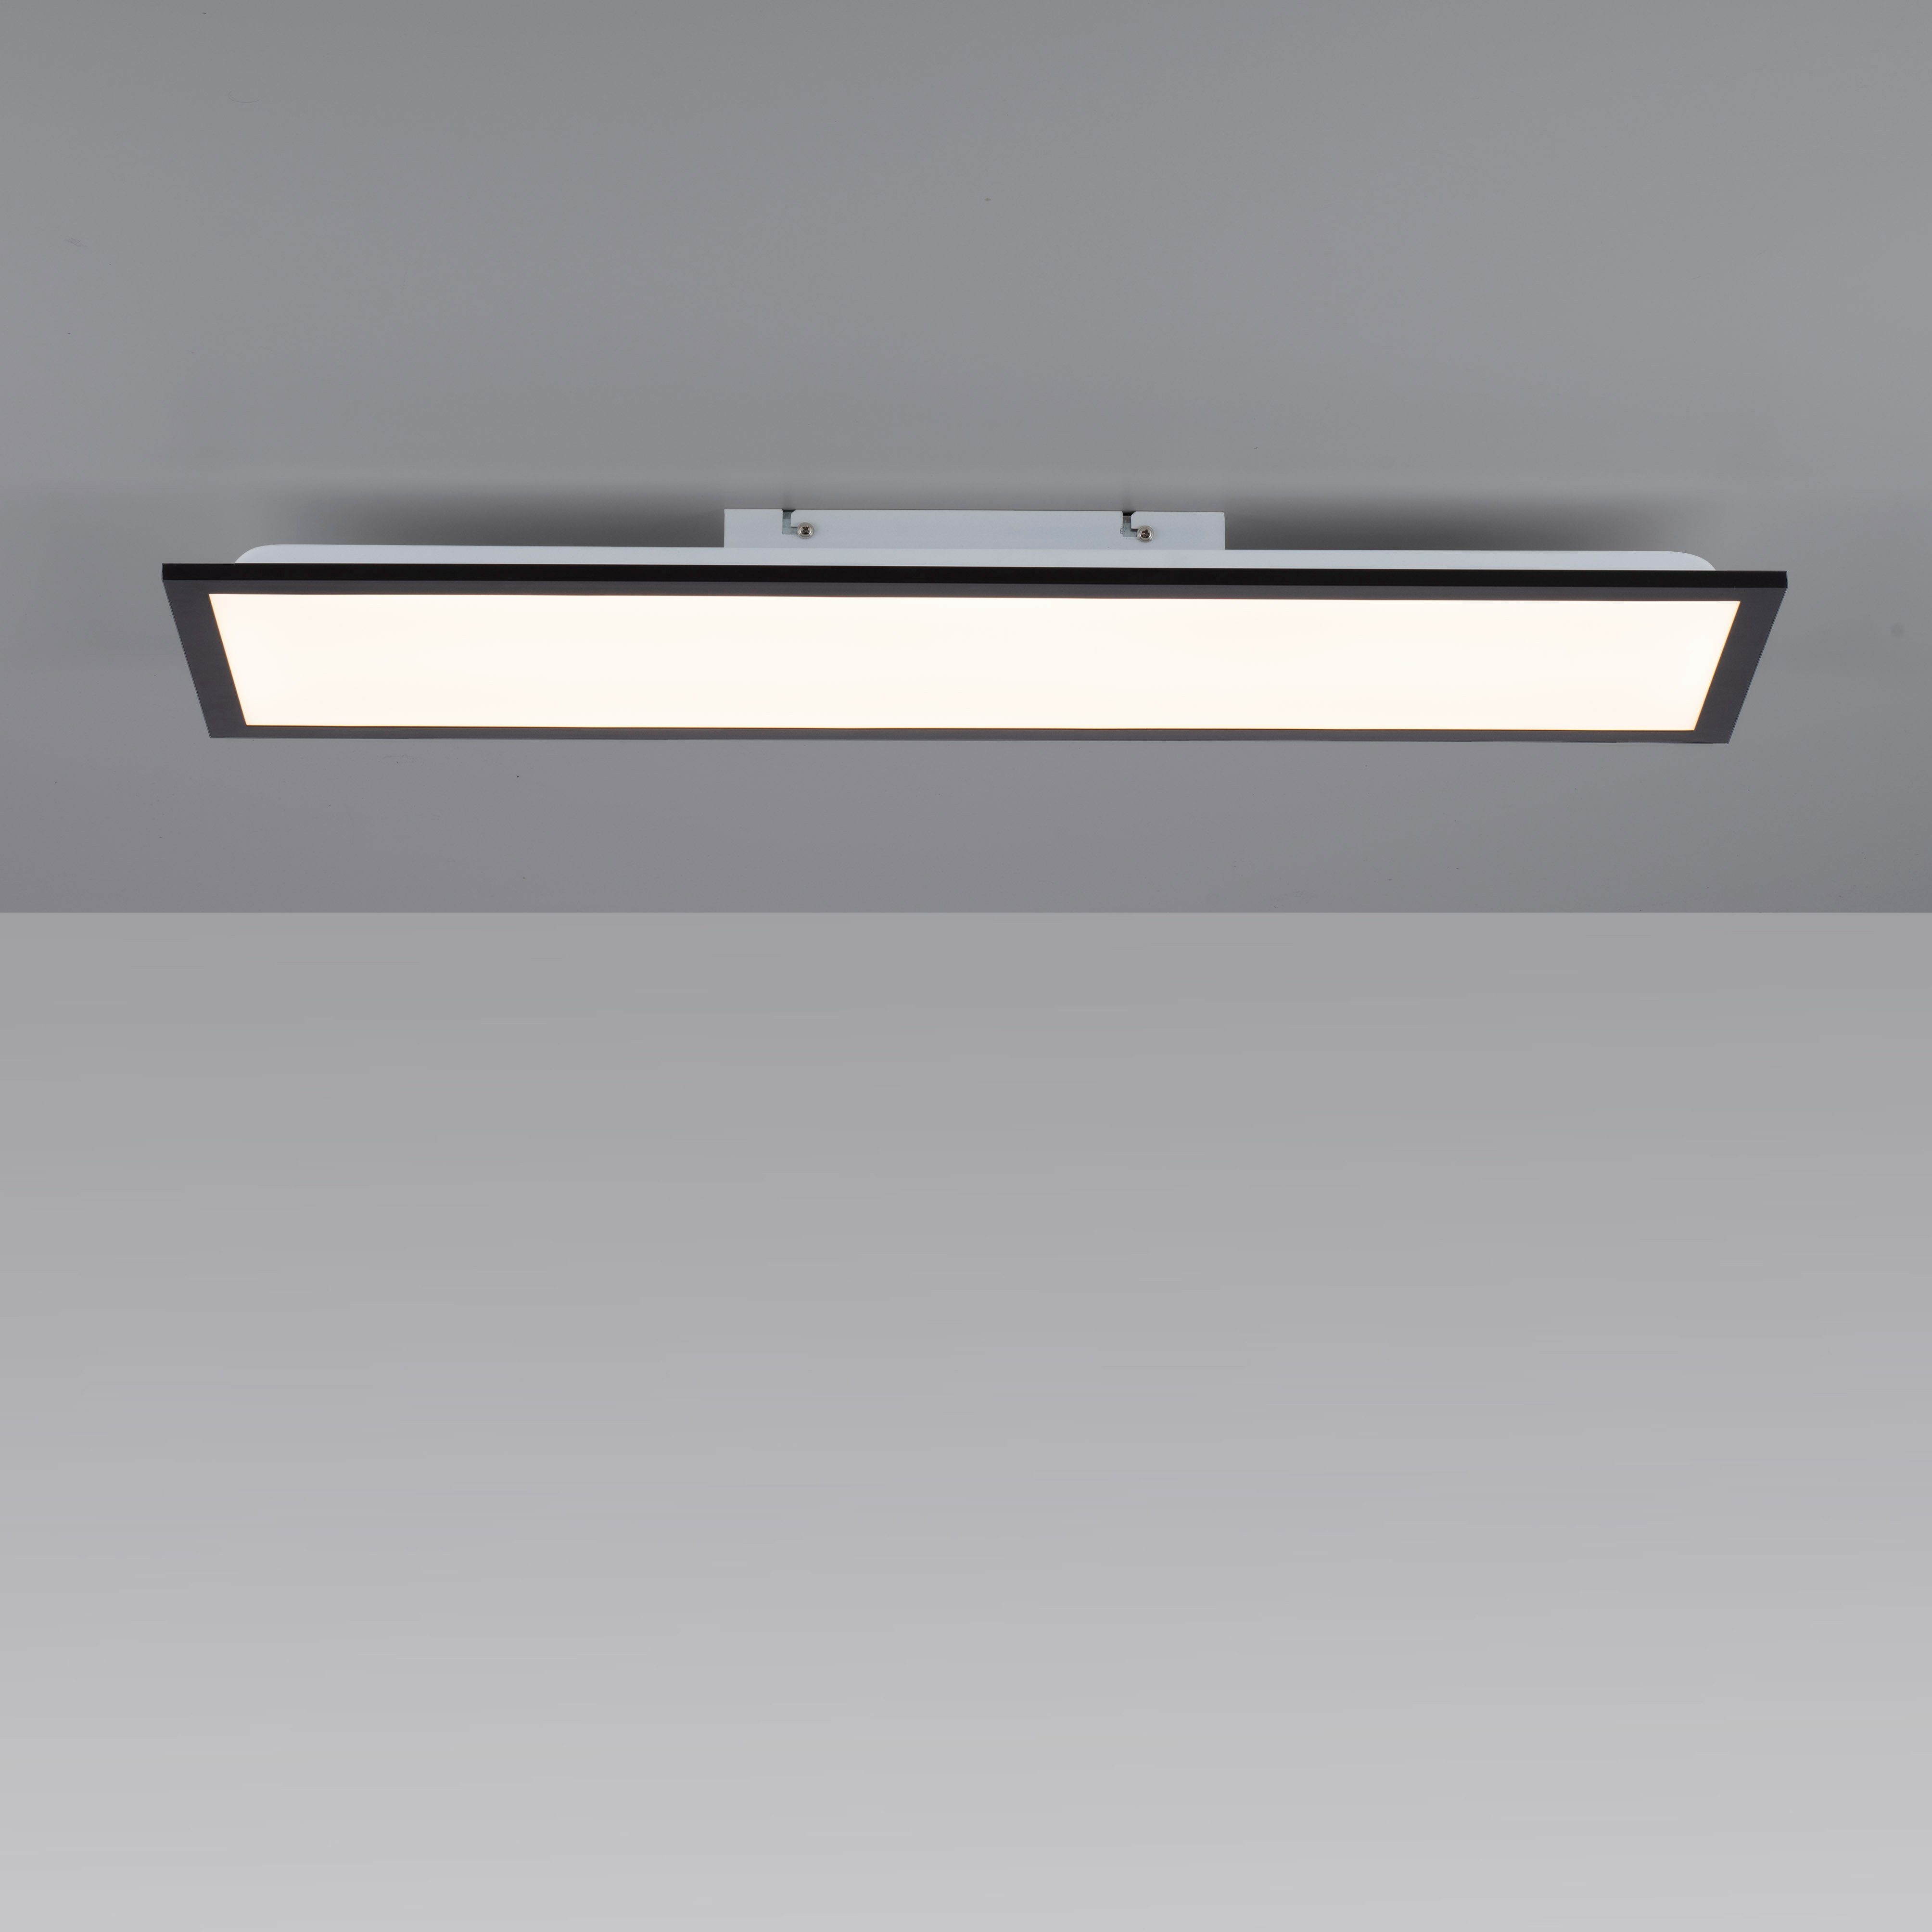 FLAT, integriert, Leuchten fest LED LED Deckenleuchte Warmweiß, Direkt